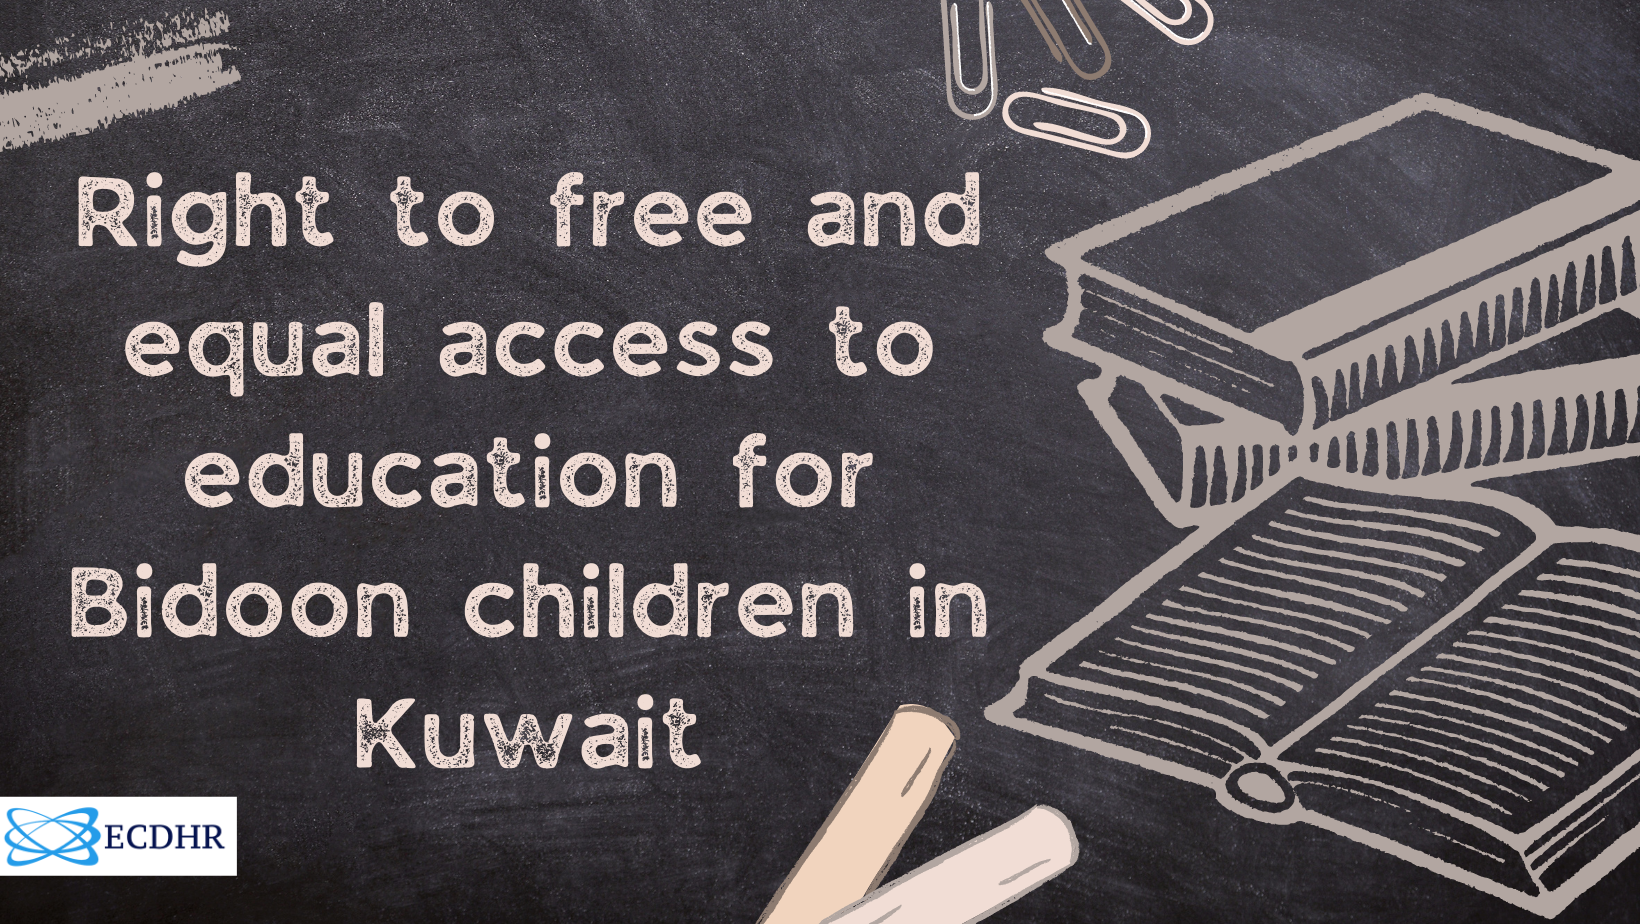 Right to free education for the Bidoon children in Kuwait – ECDHR